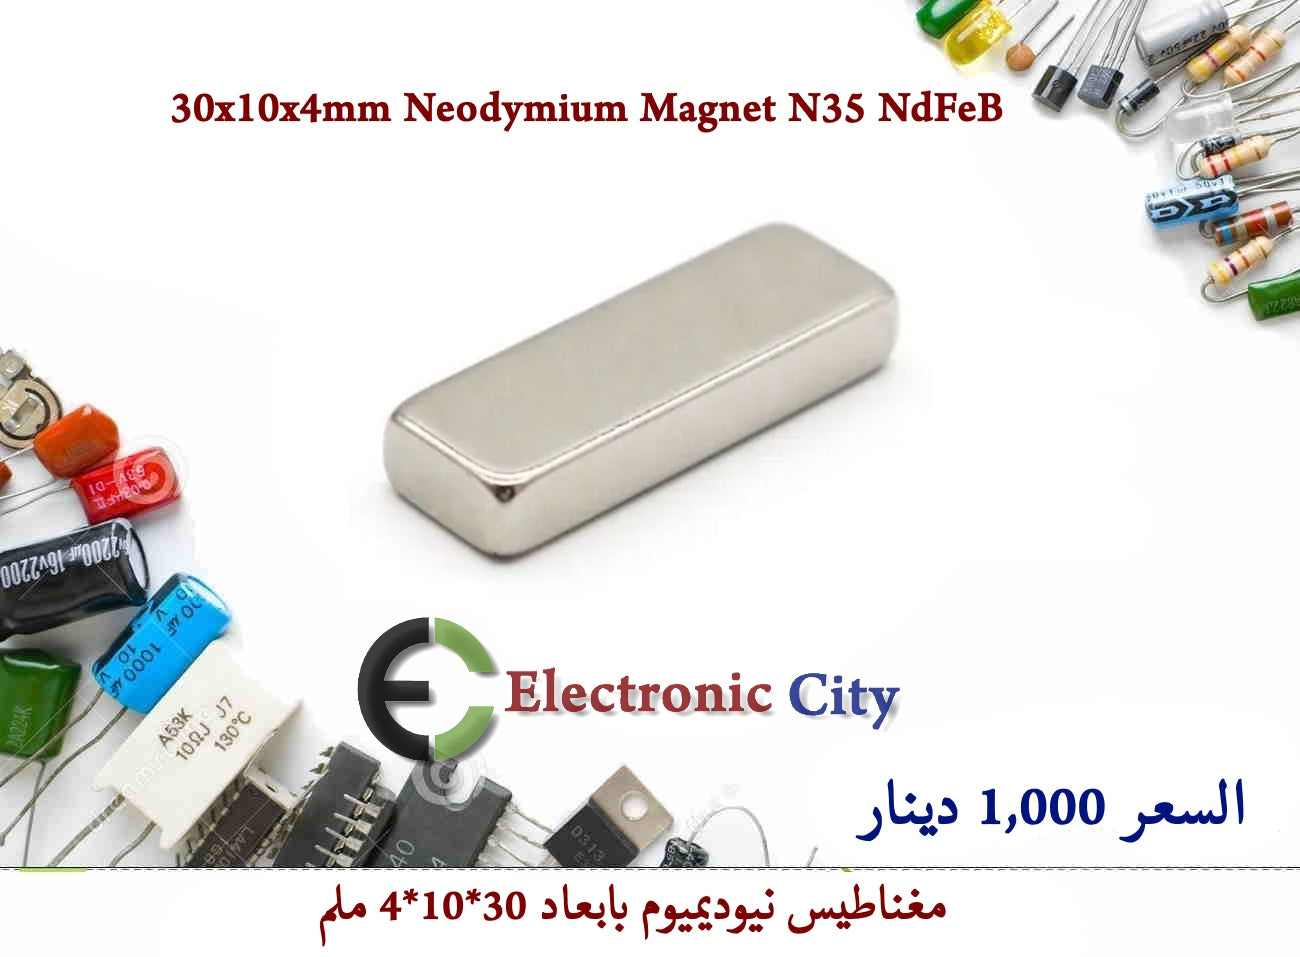 30x10x4mm Neodymium Magnet N35 NdFeB